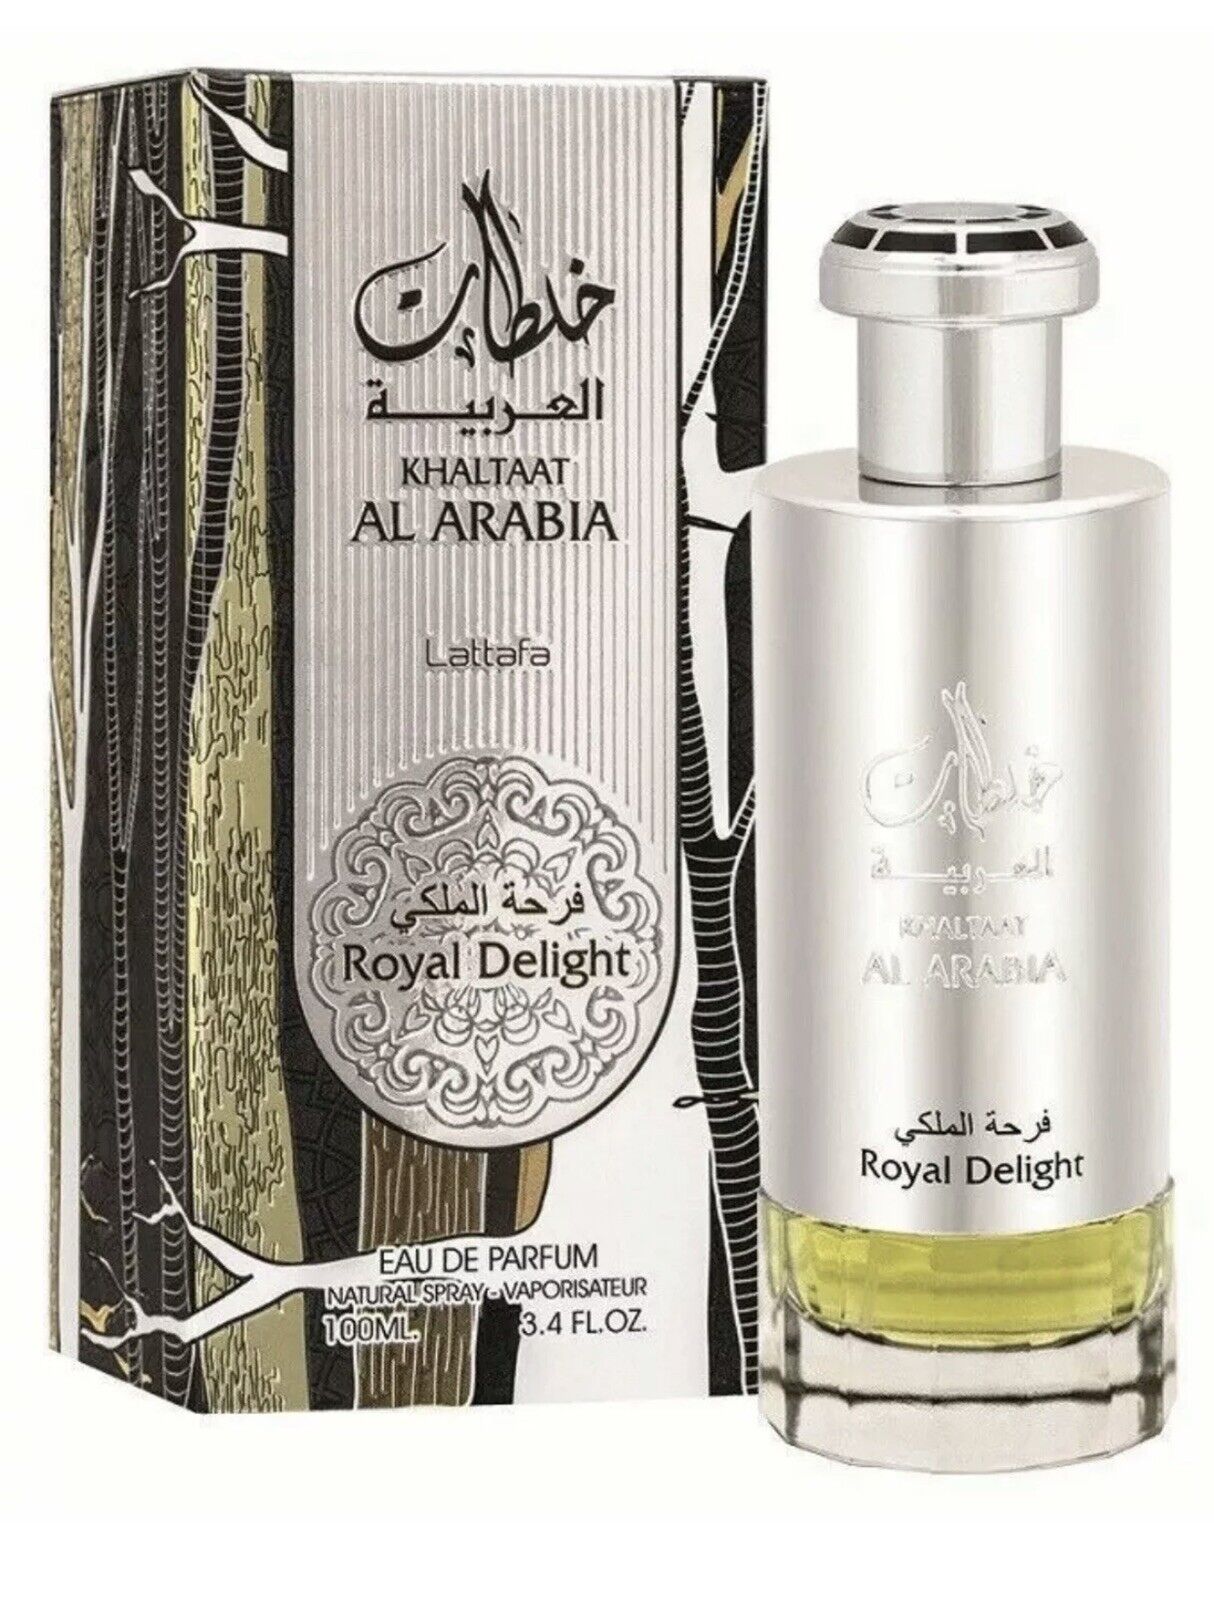 Khaltaat Arabia Royal Delight Silver EDP Perfume By Lattafa 100 Ml